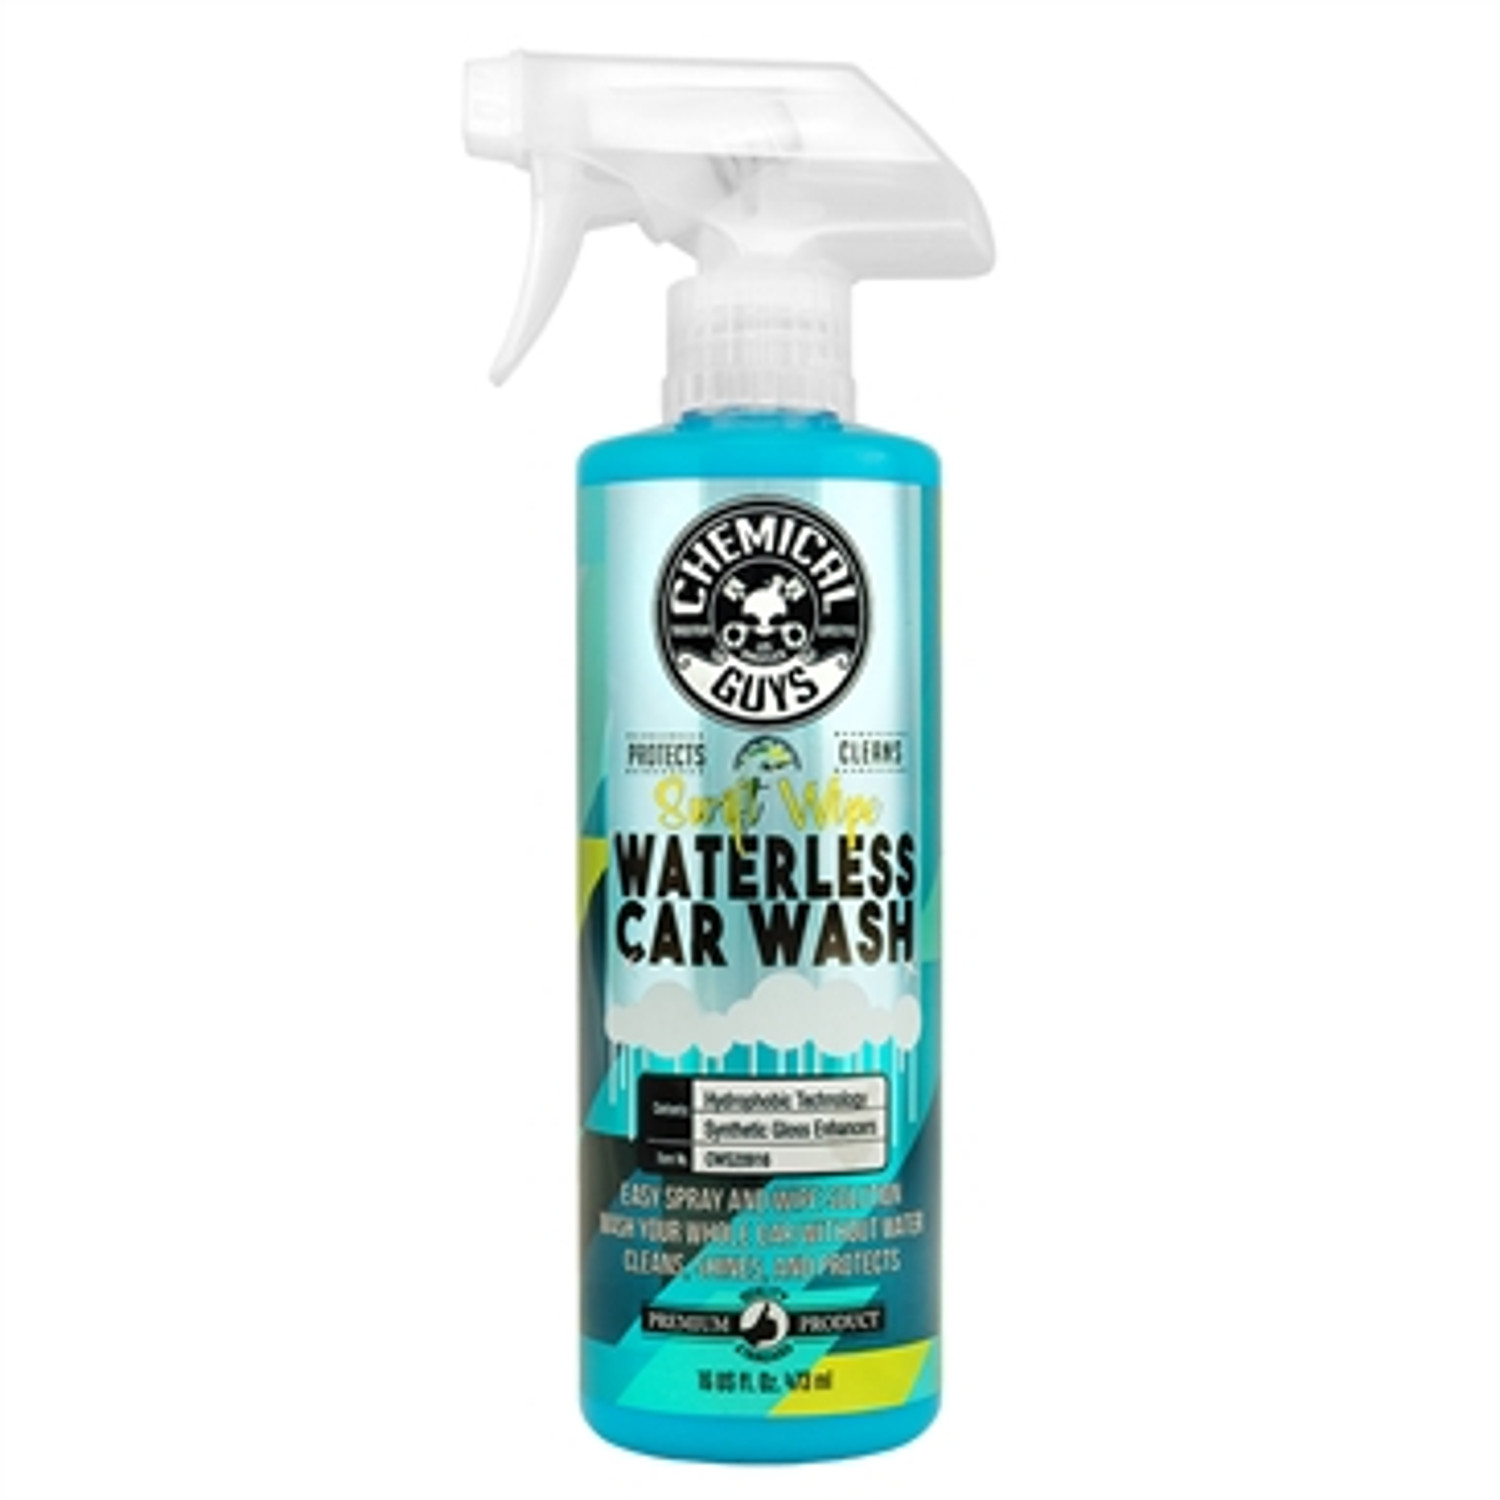 Chemical Guys Clean Slate Wax Stripping Shampoo 